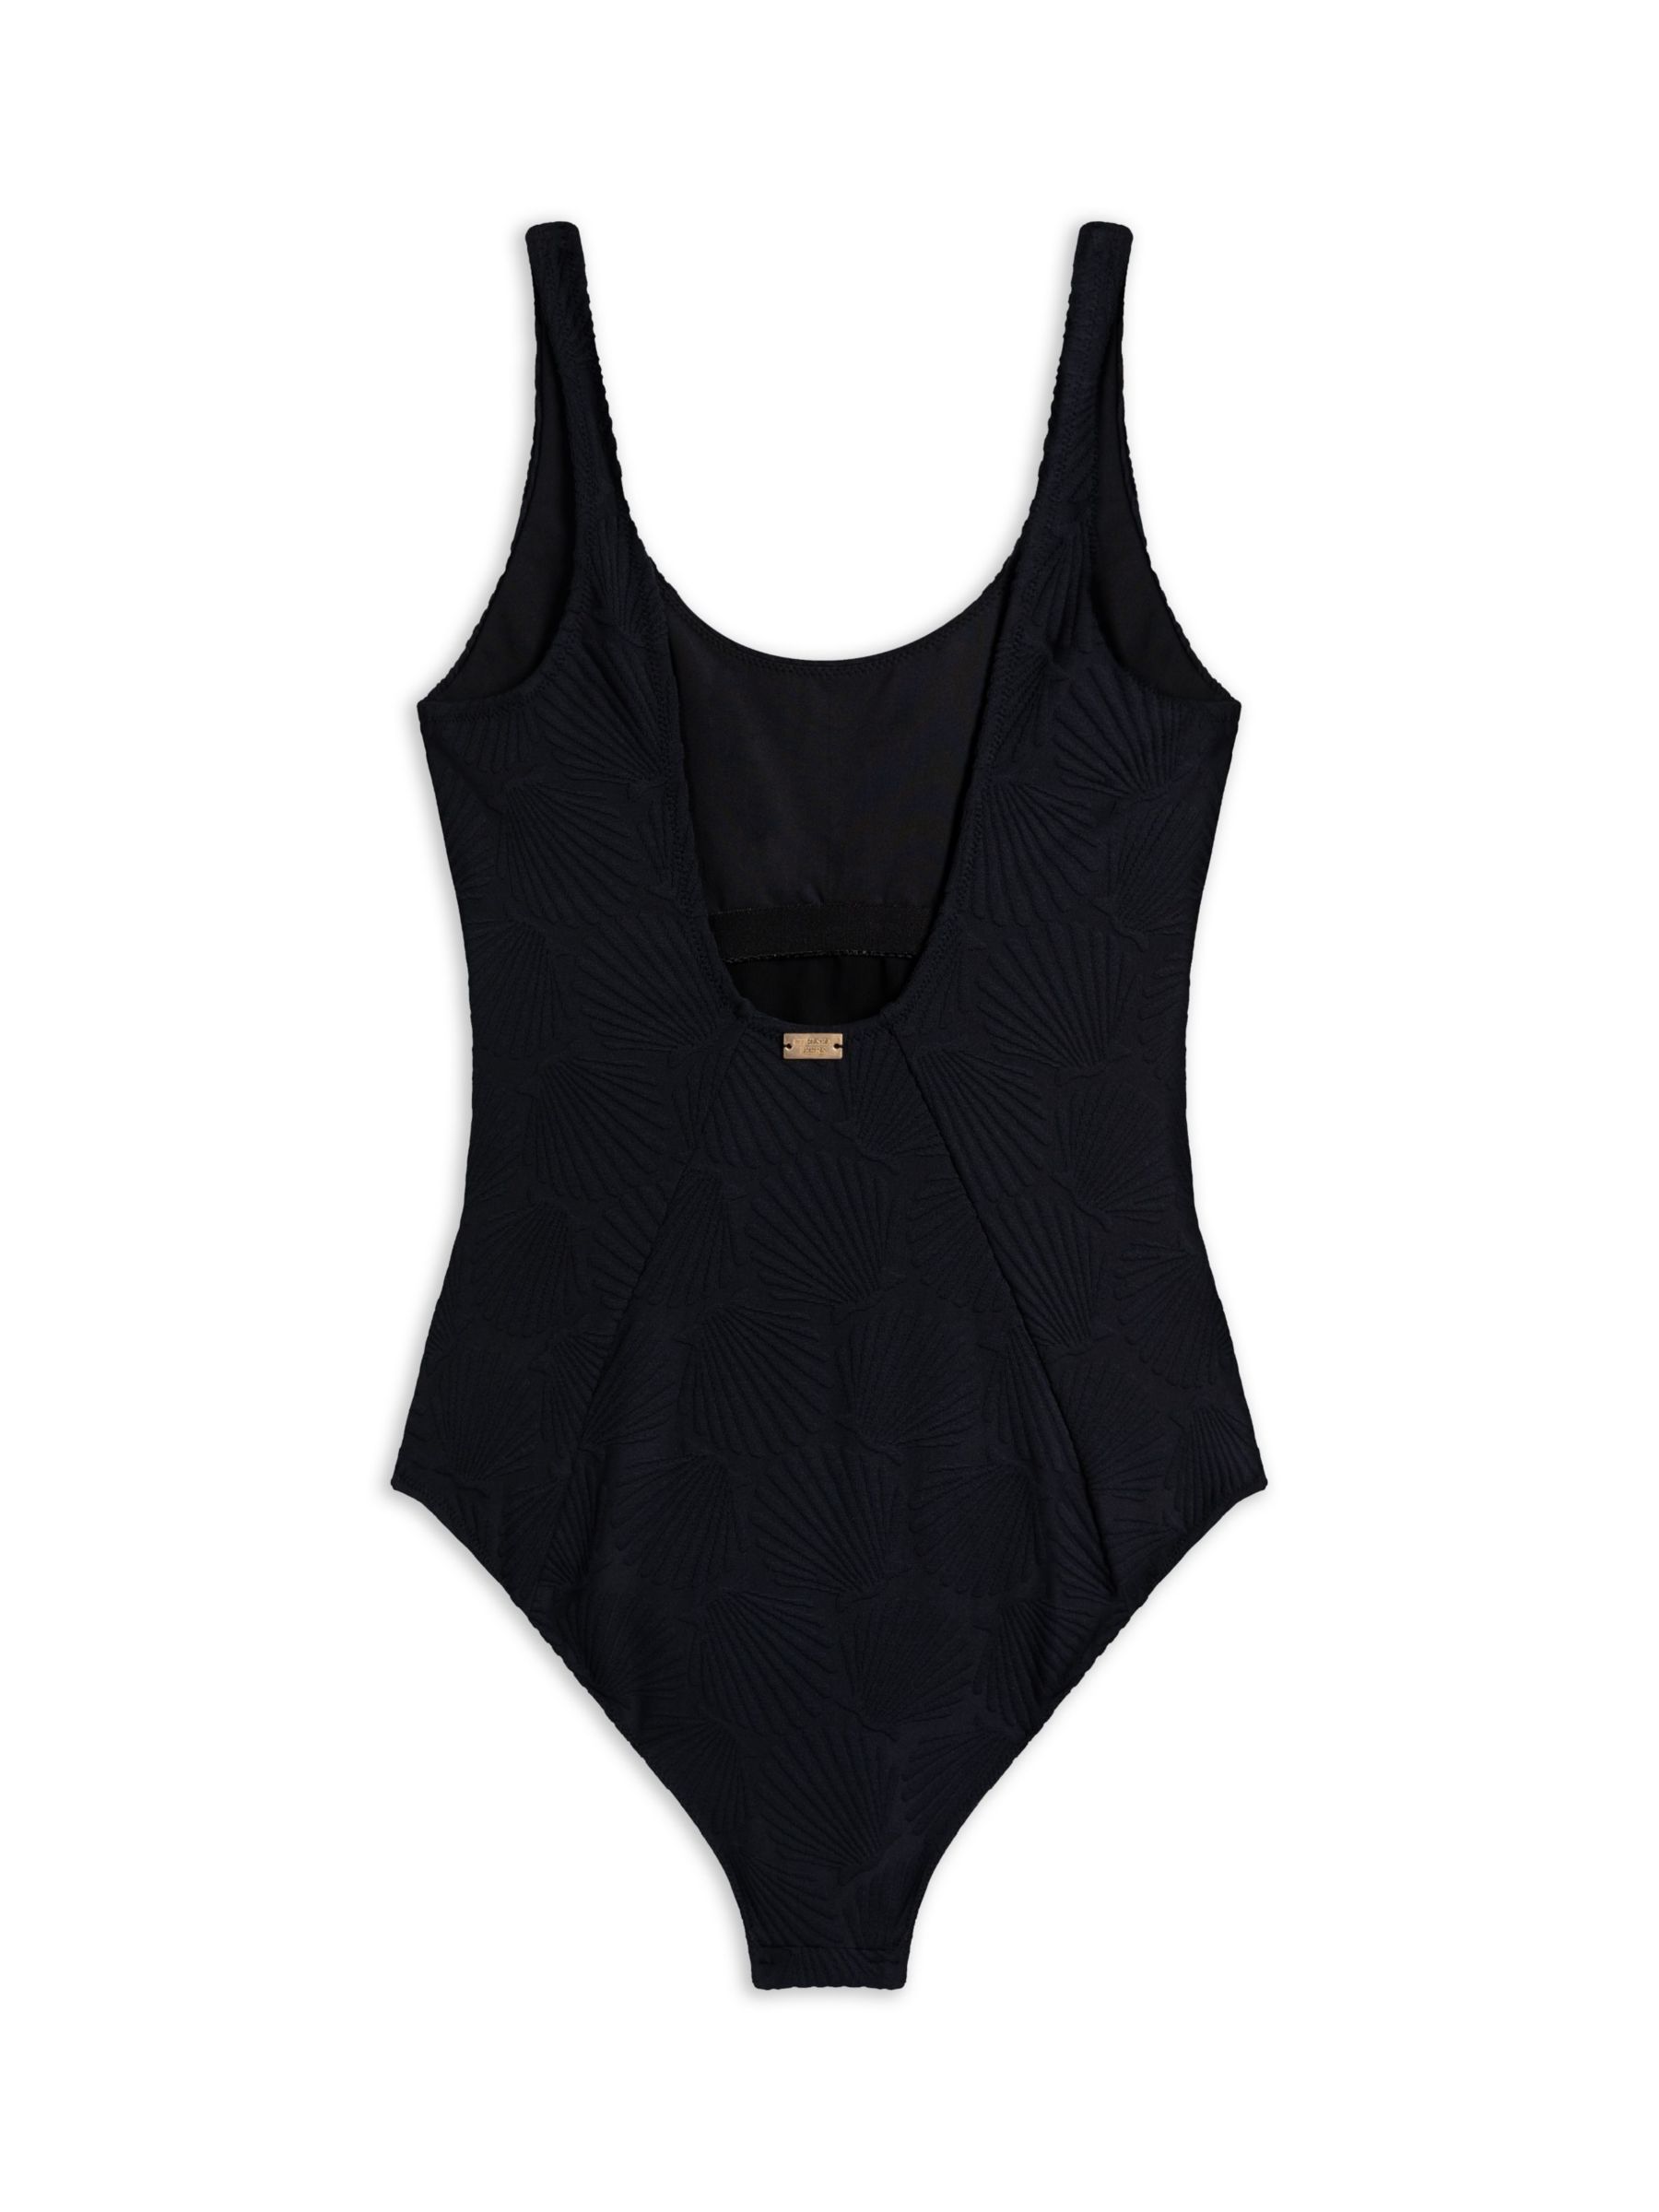 Chelsea Peers Jacquard Shell Swimsuit, Black, 6